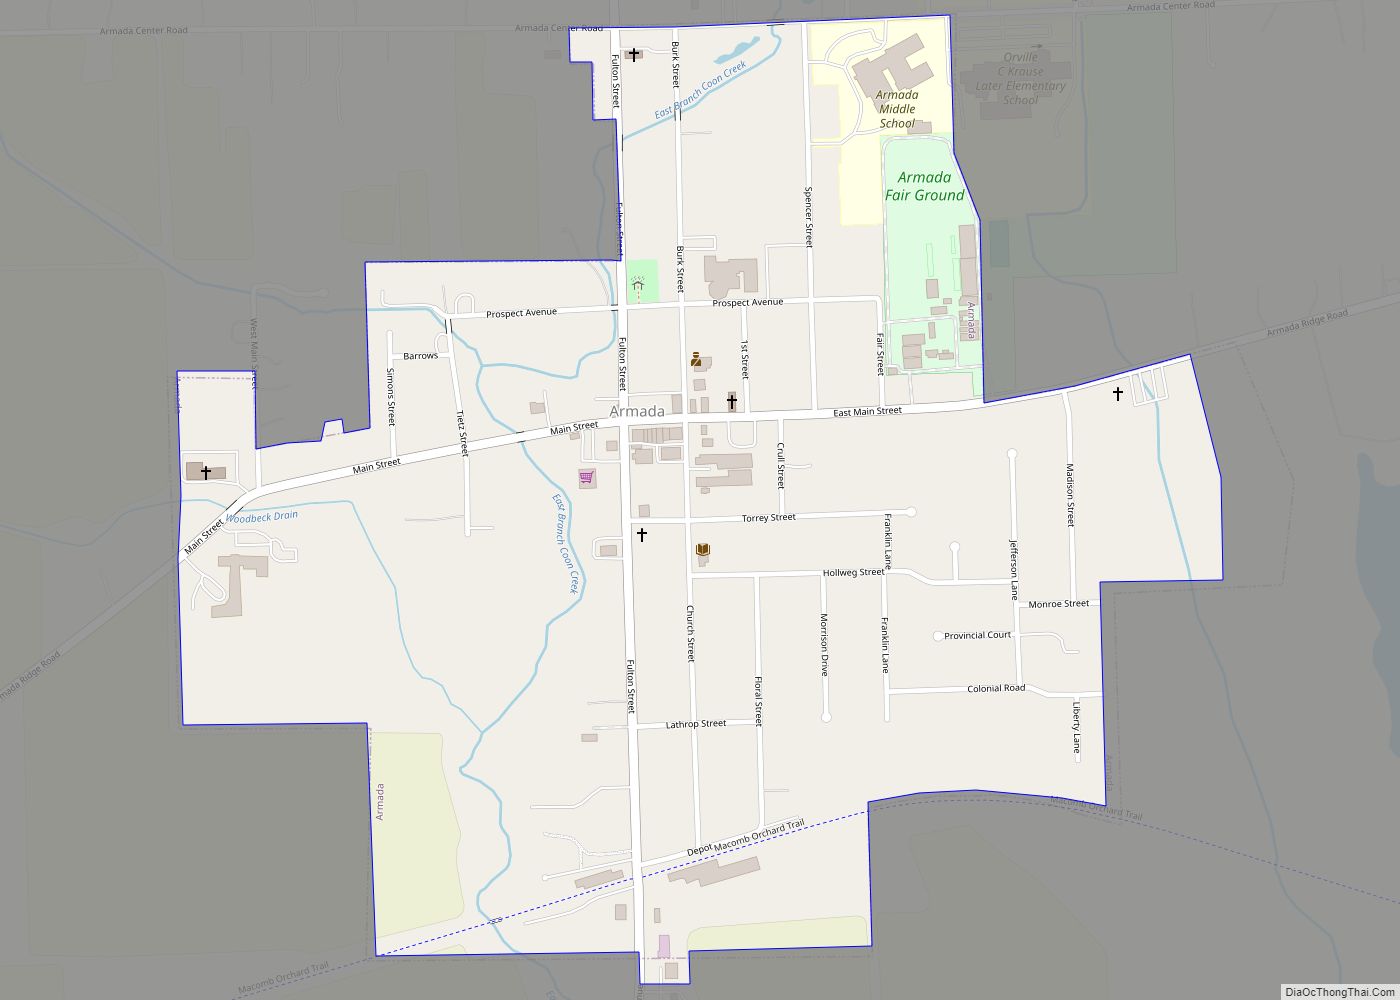 Map of Armada village